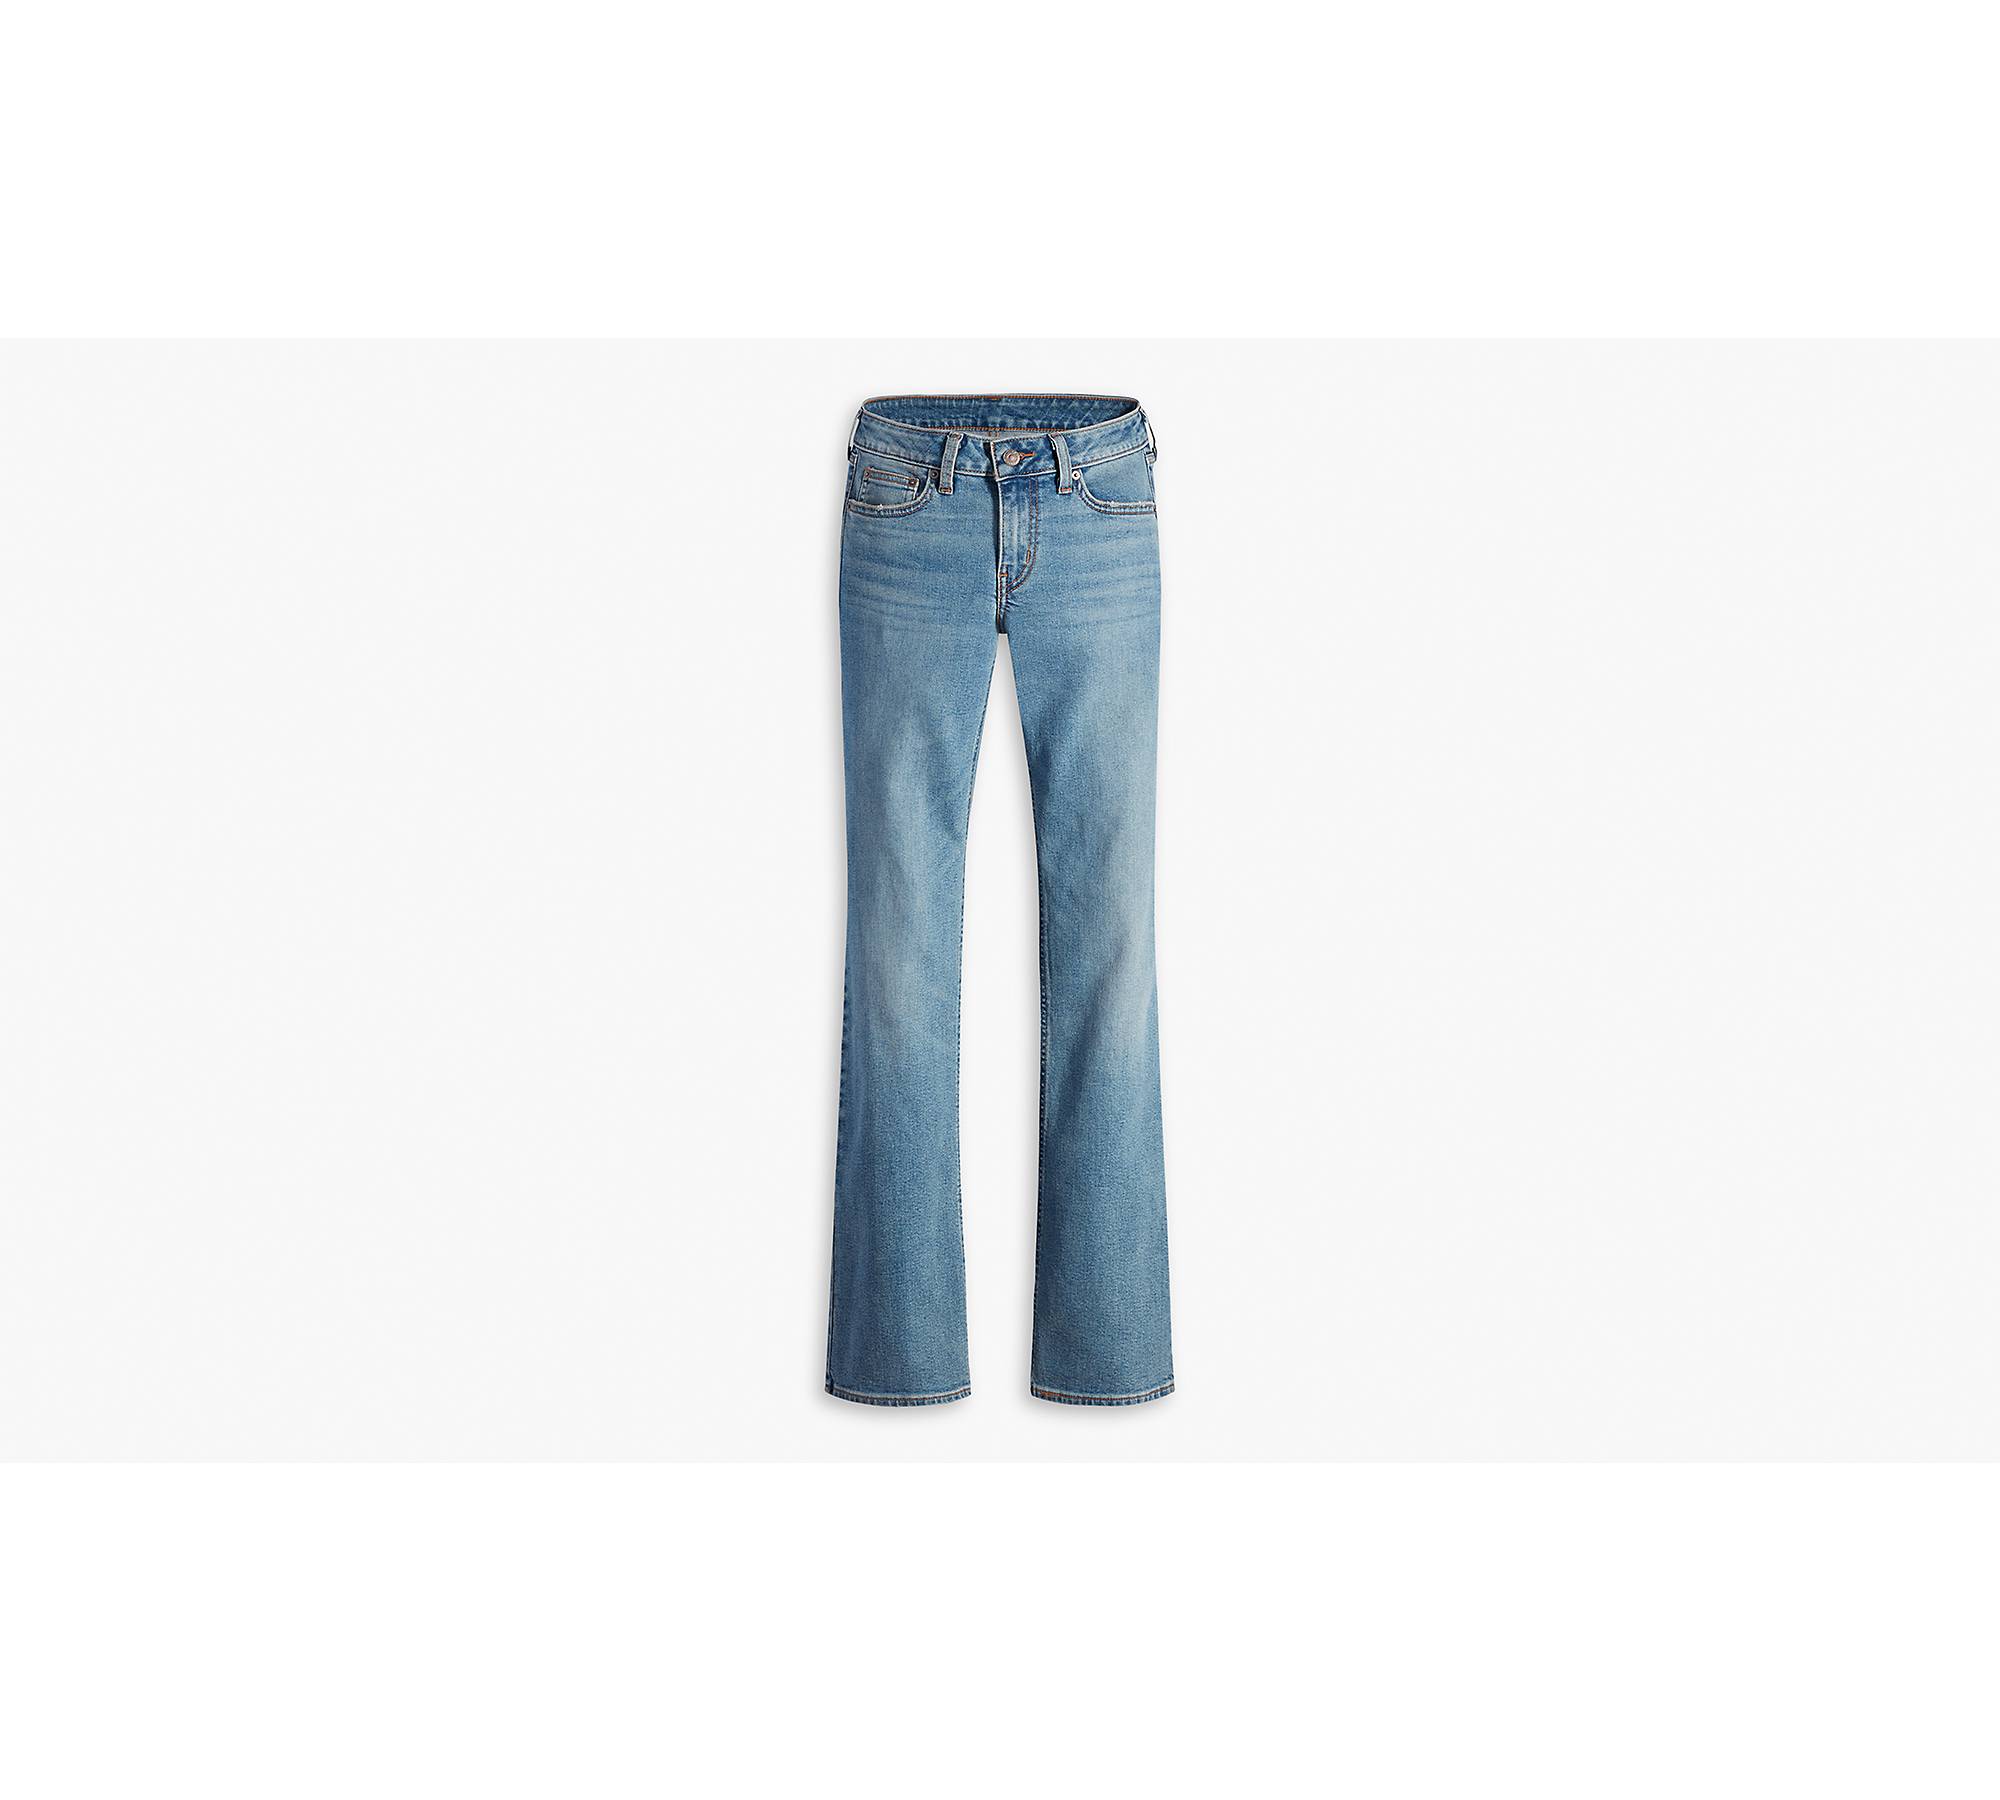 Denizen® From Levi's® Women's Plus Size Mid-rise Bootcut Jeans